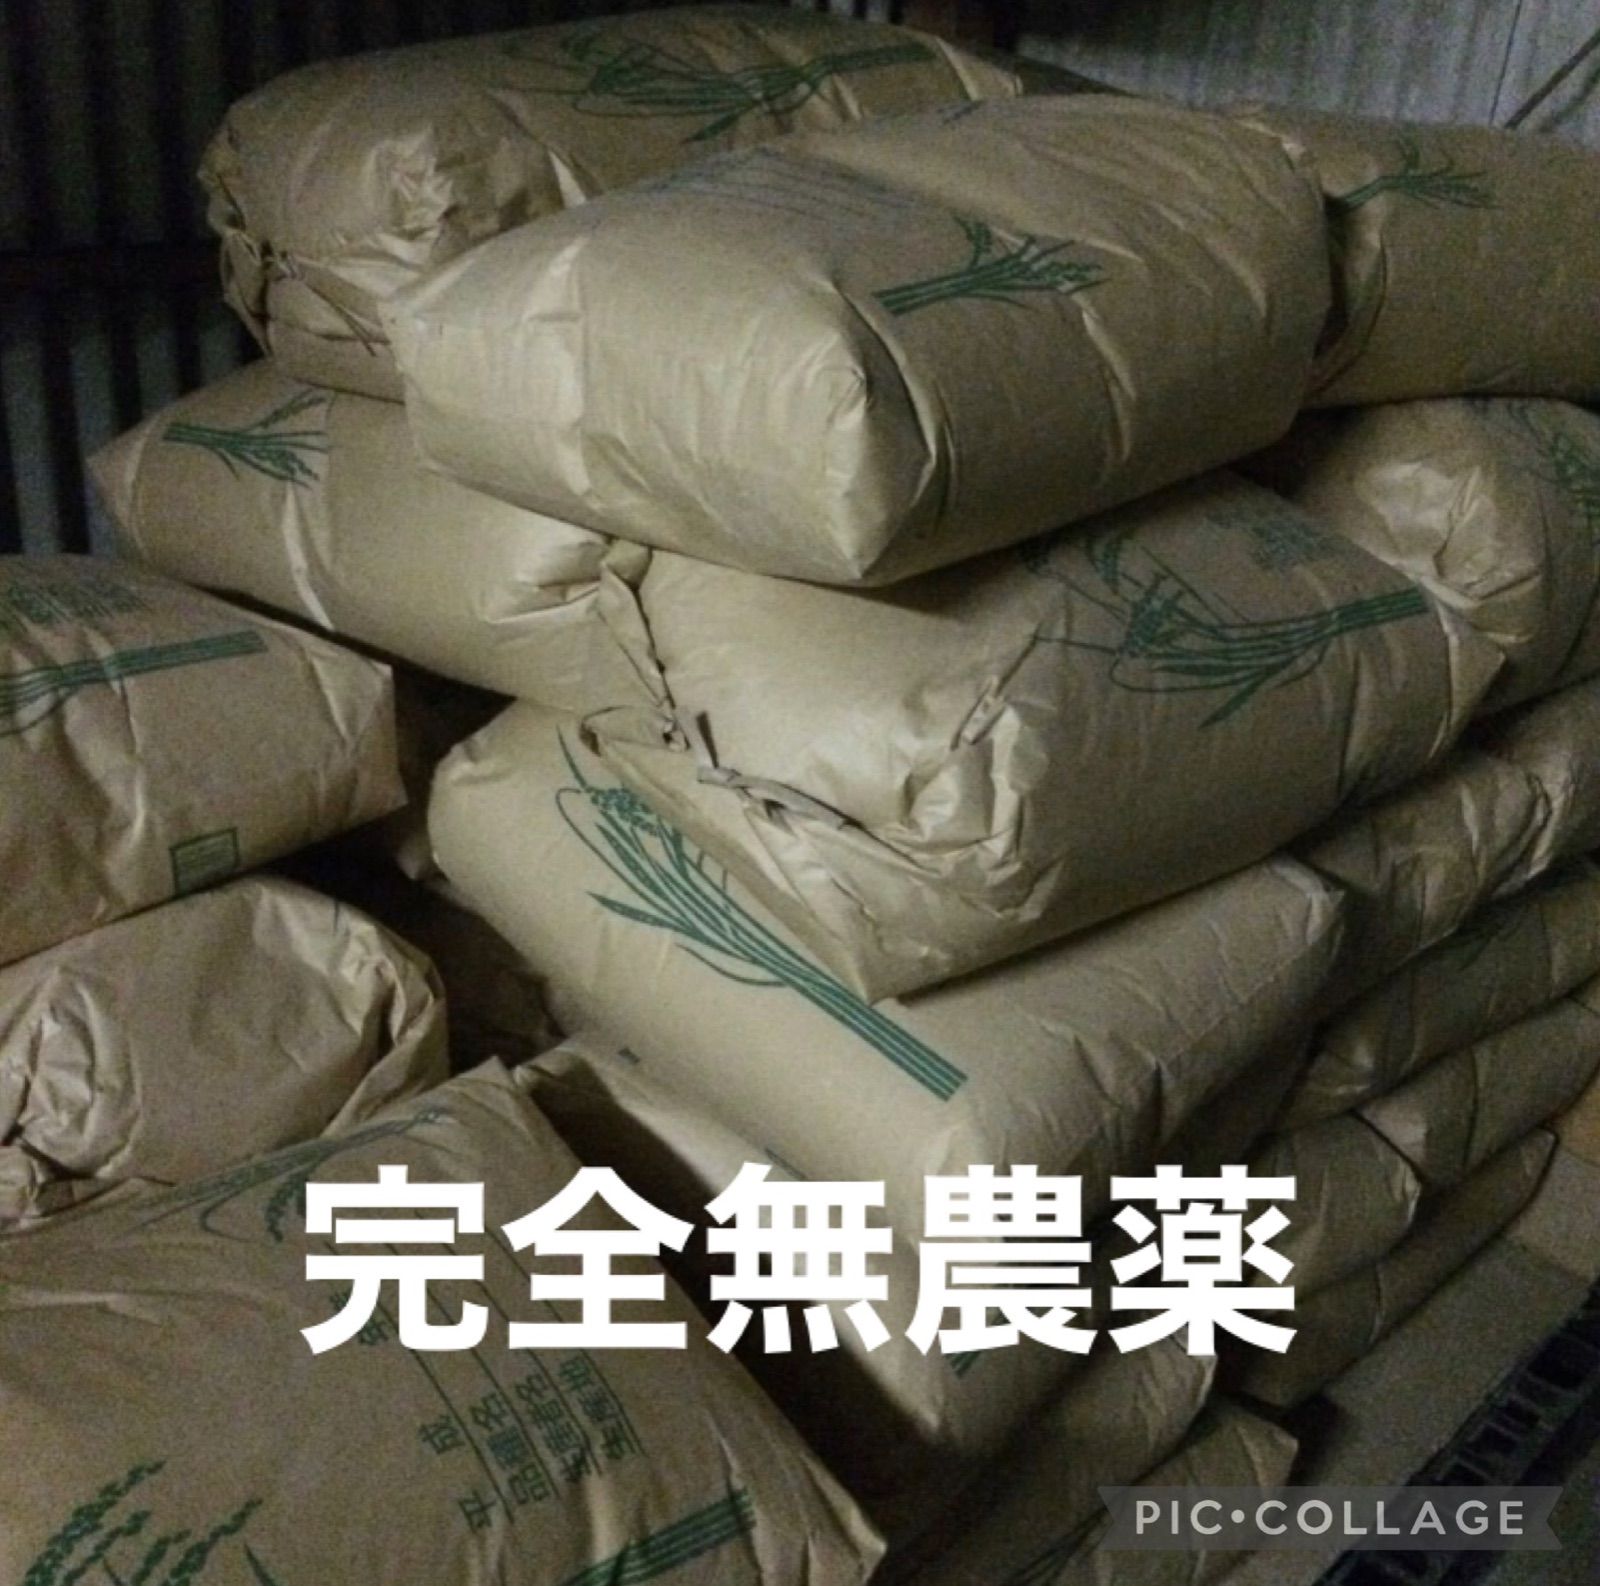 コシヒカリ 5kg 農薬不使用 玄米 国産 農家直送 令和5年 新米 無添加